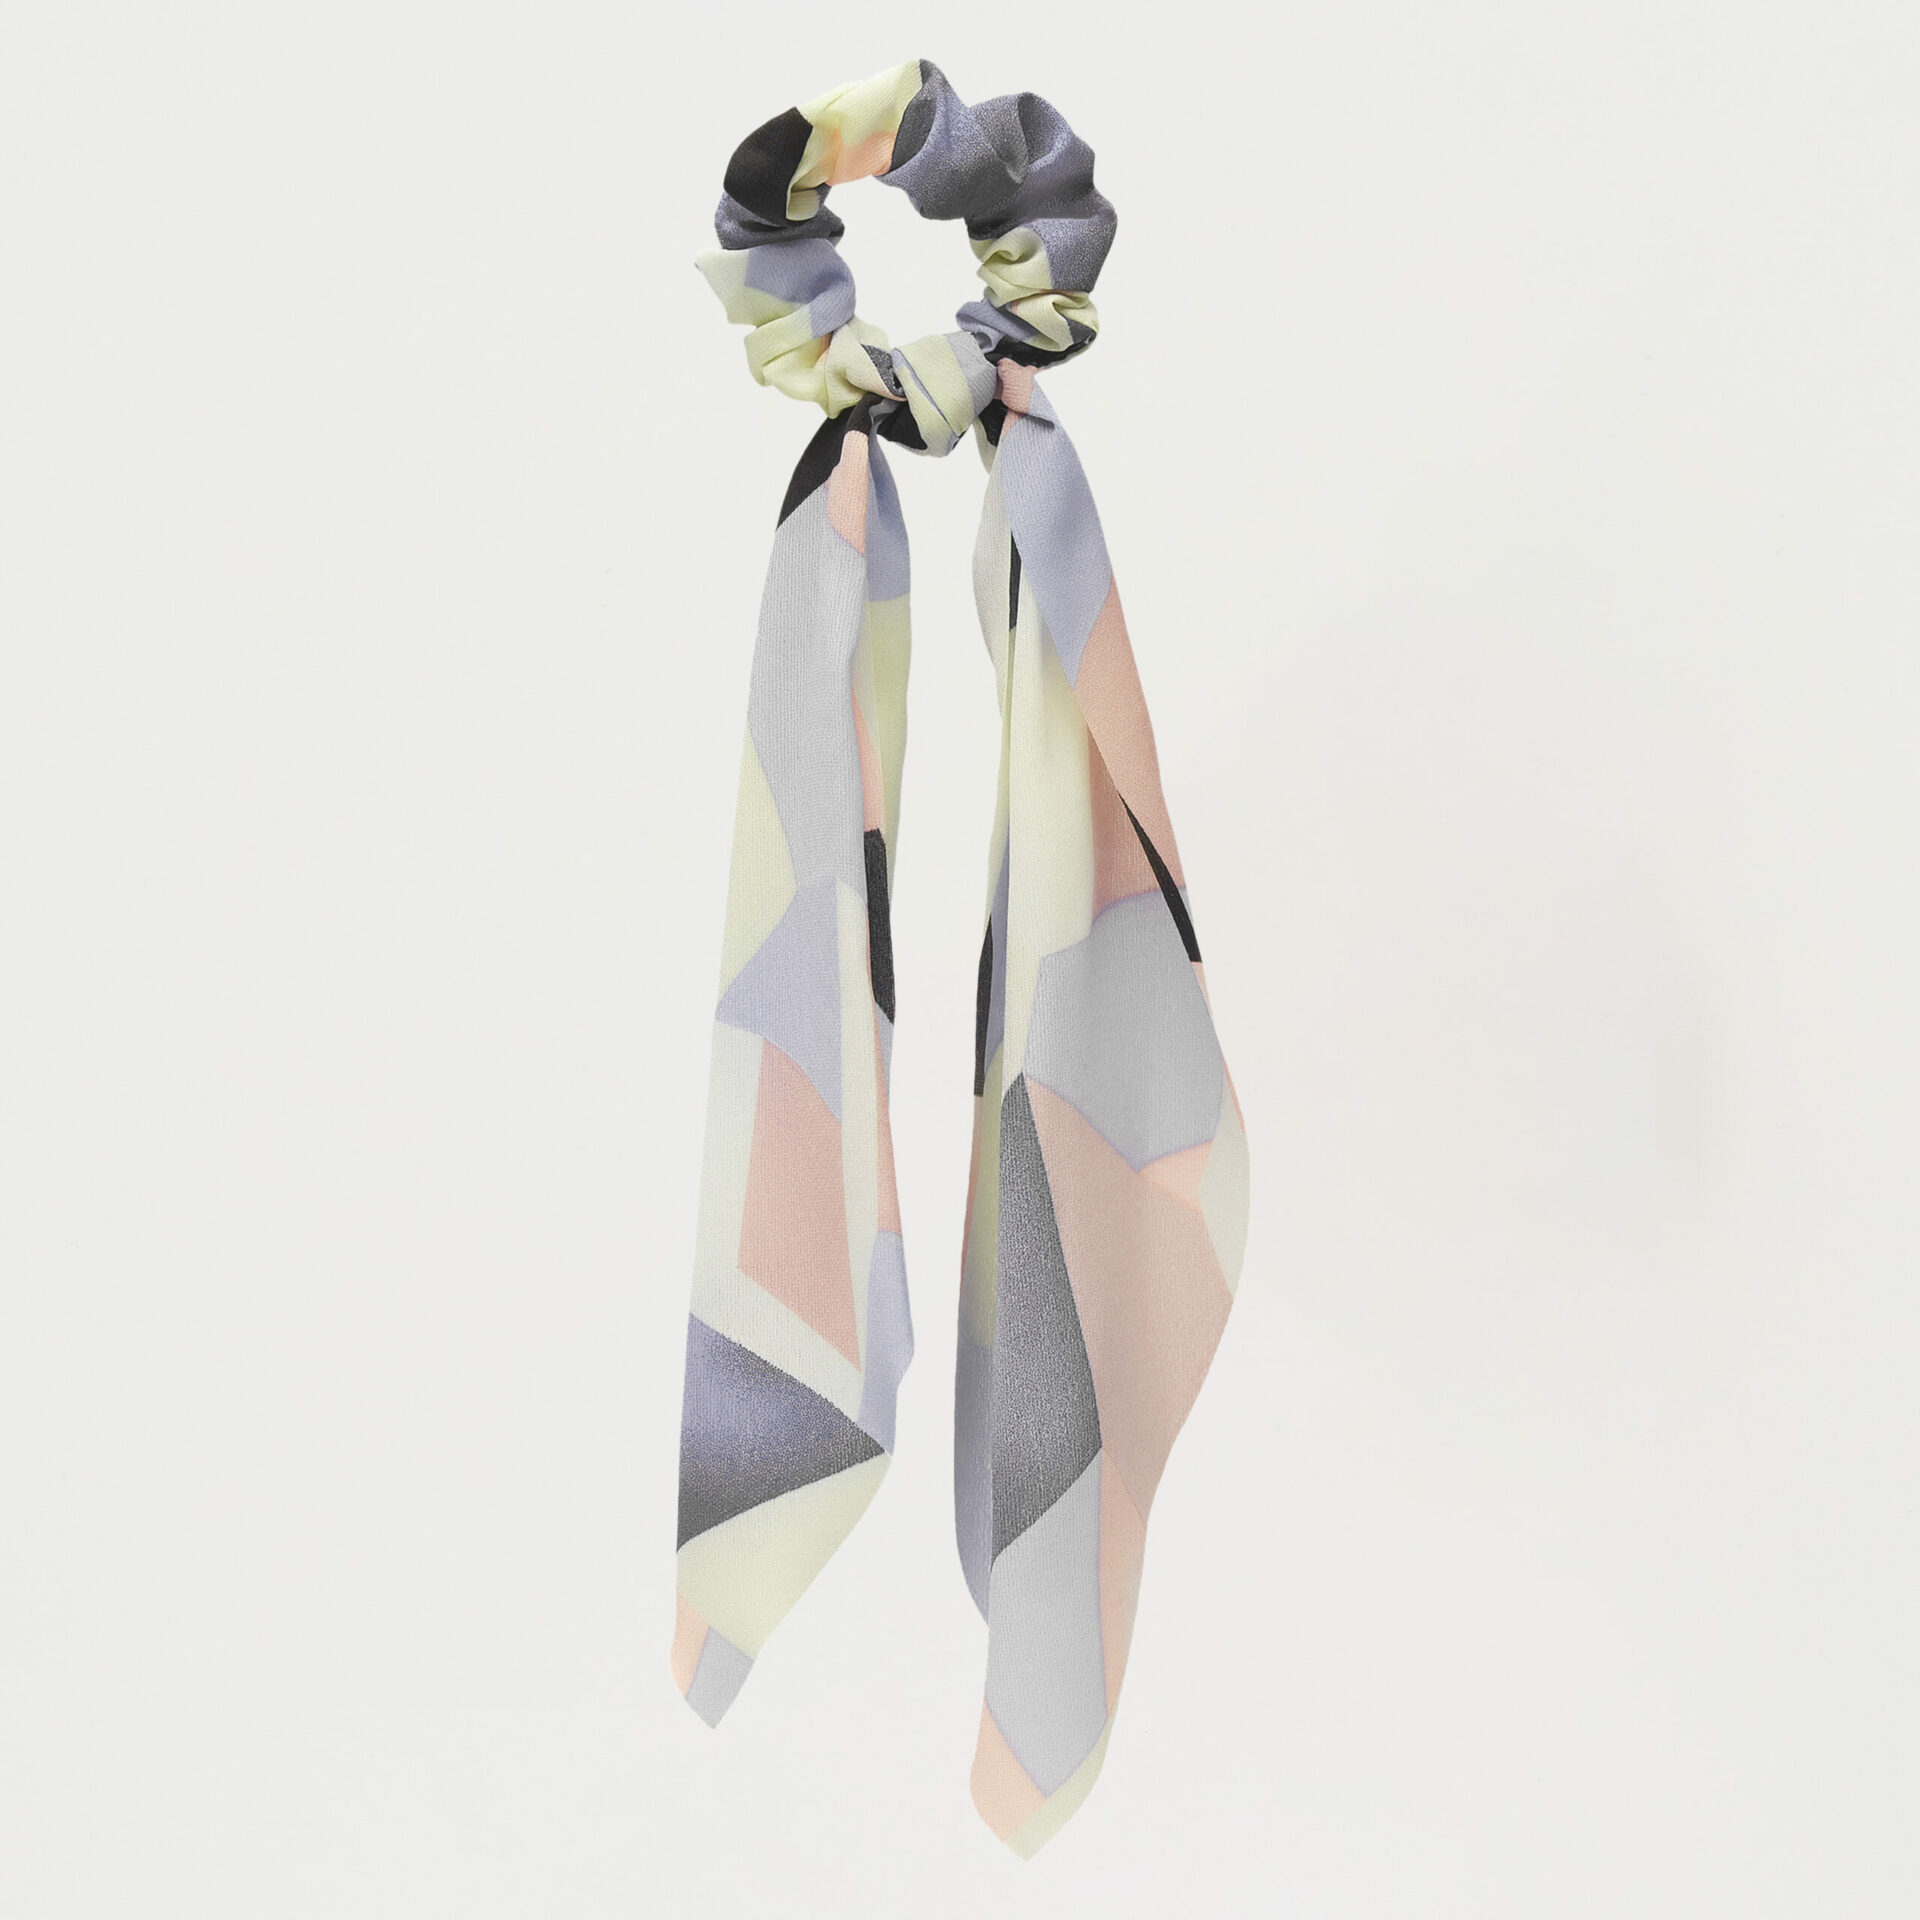 Fabrication chouchou scrunchies aver foulard by Tie Solution